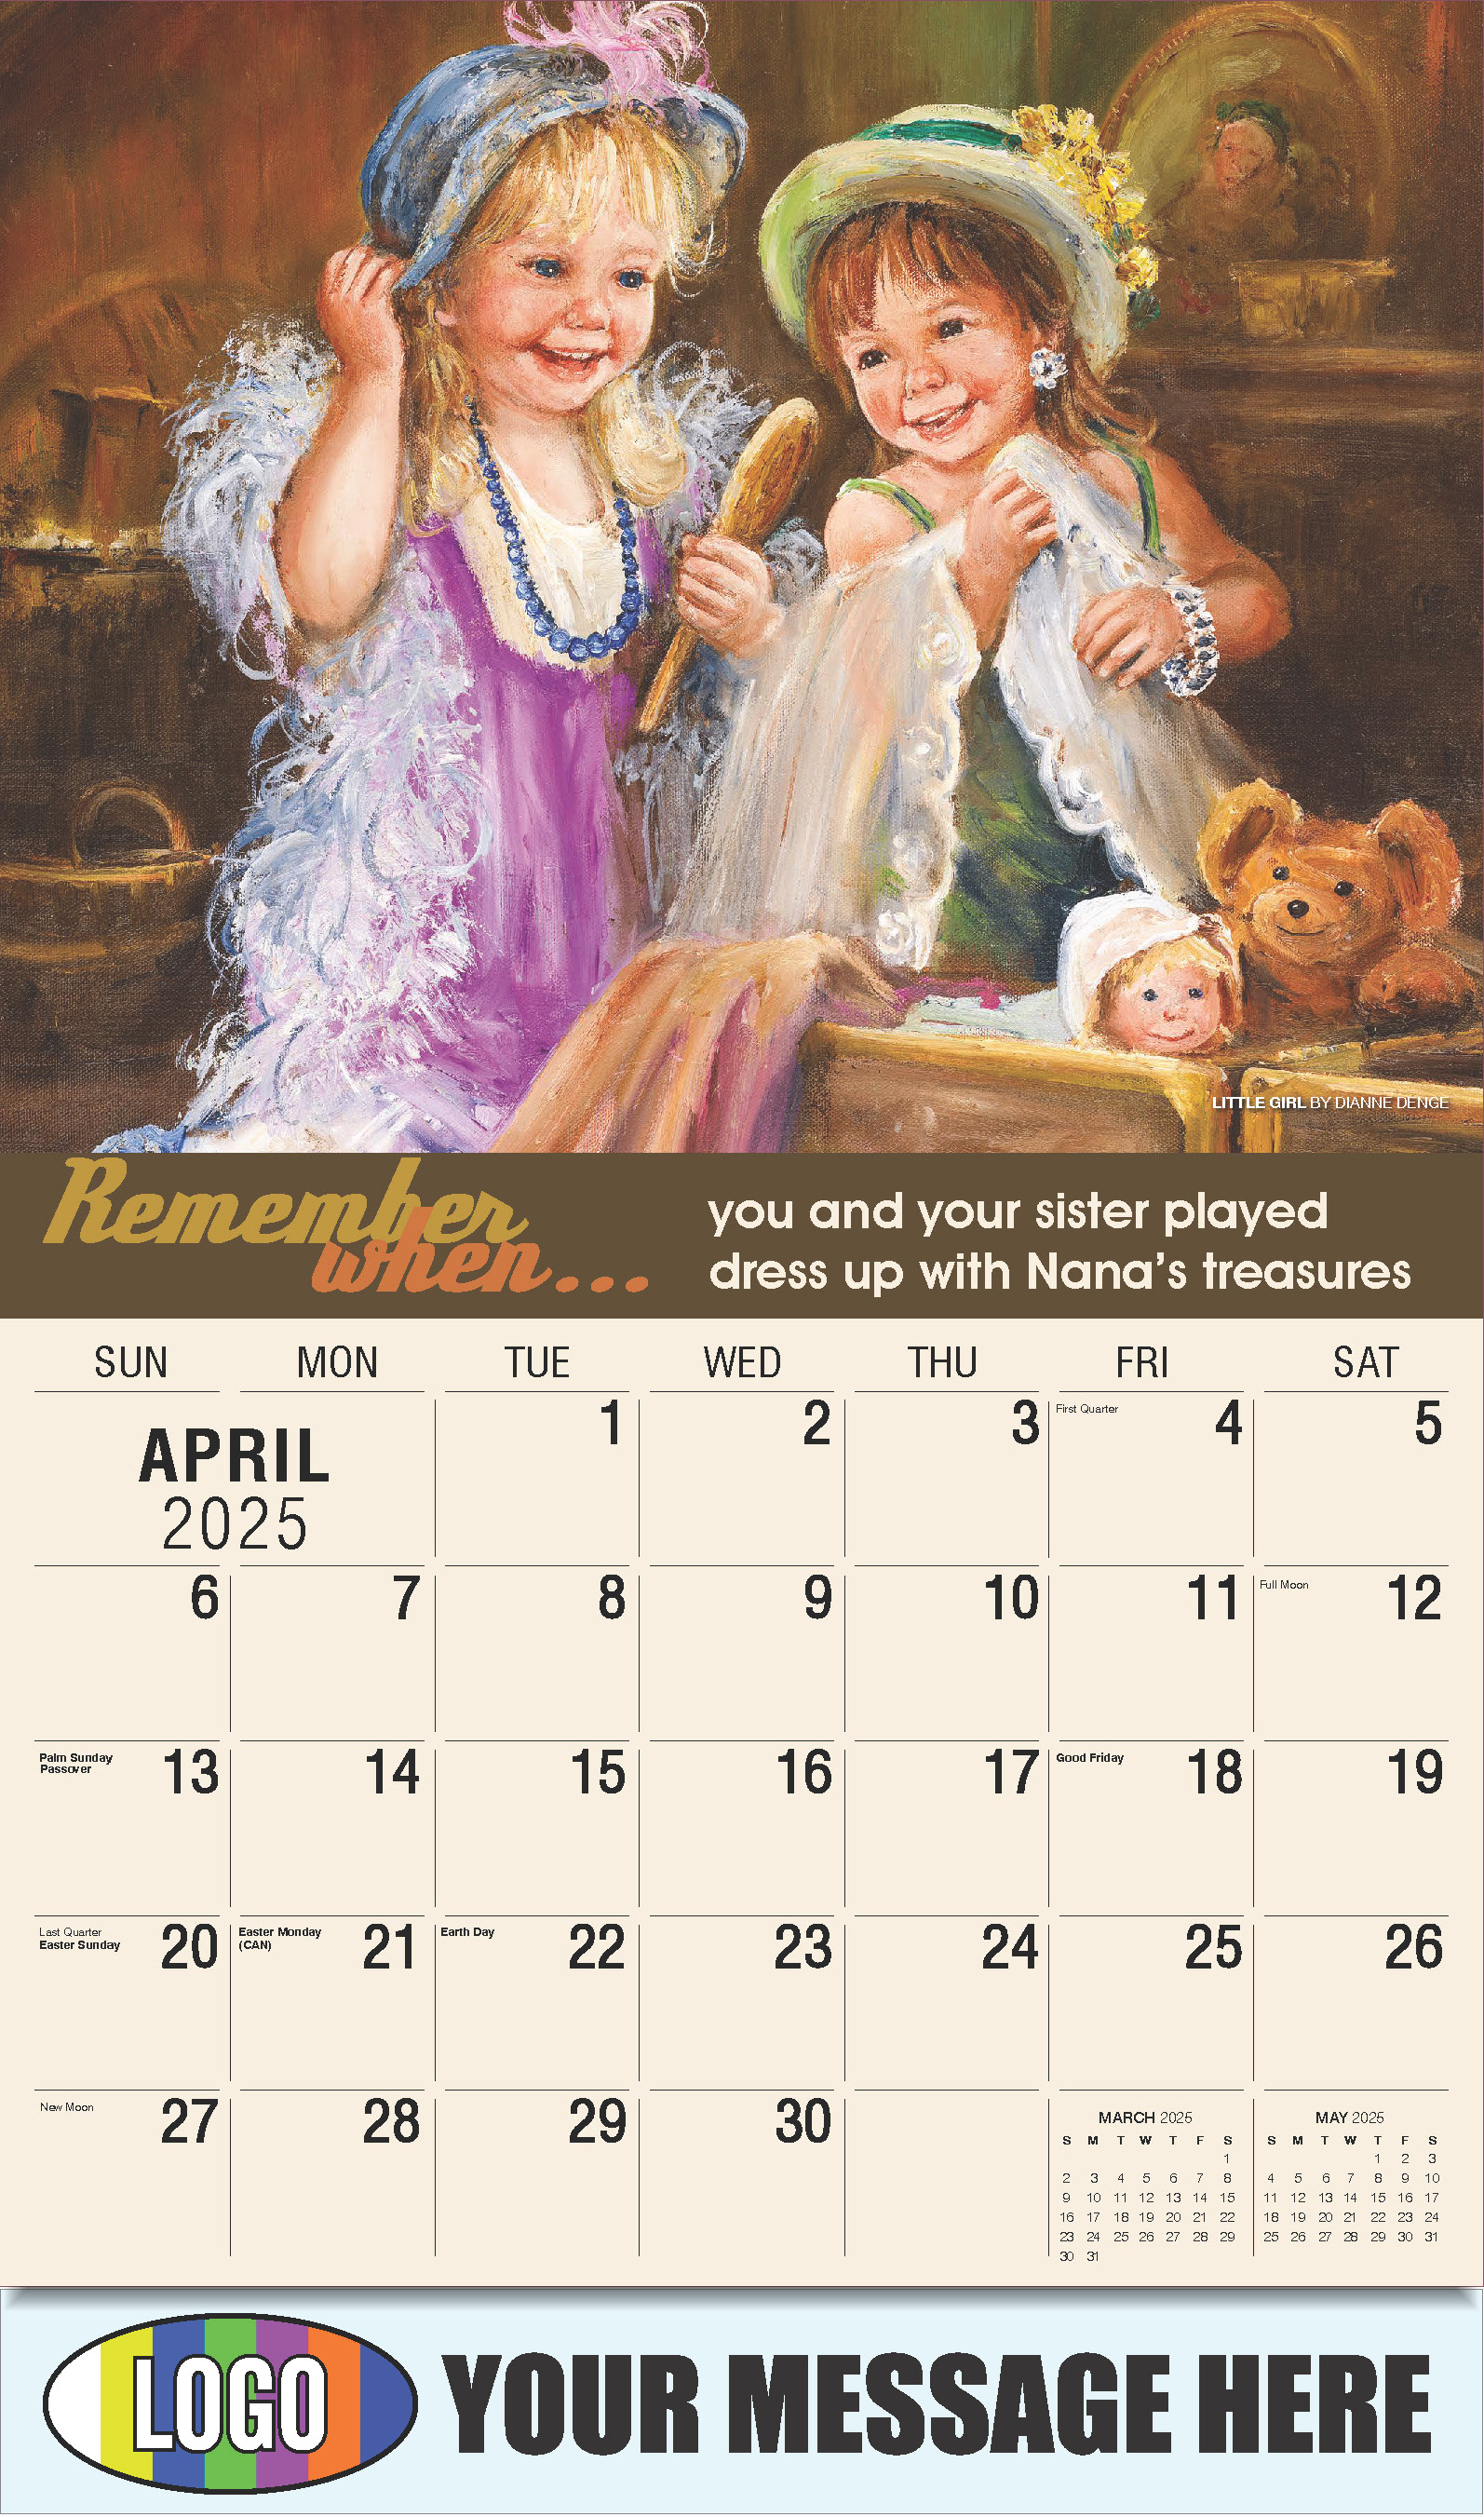 Remember When 2025 Business Advertising Calendar - April